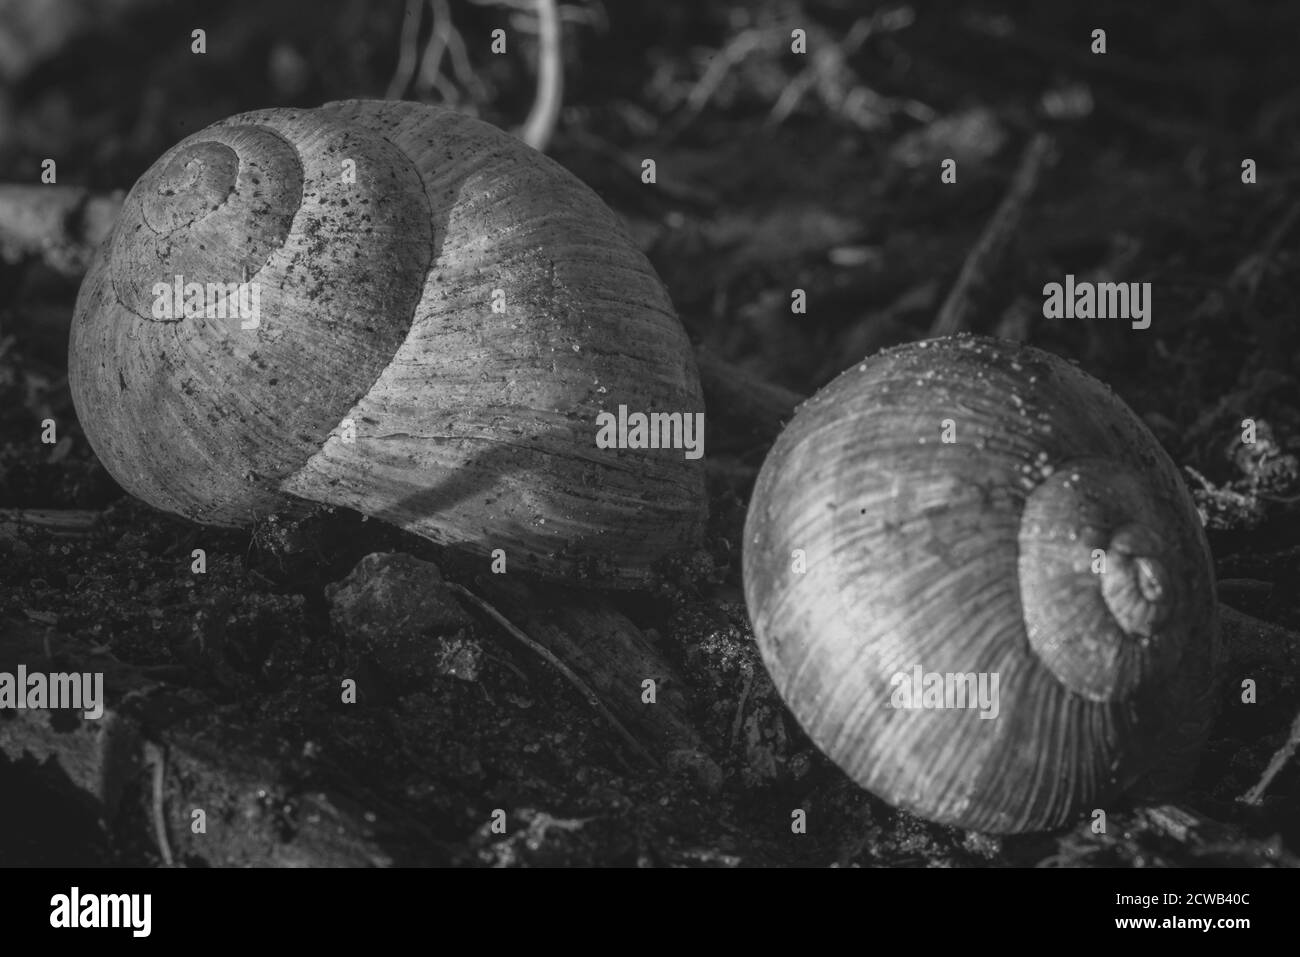 Two empty snail shells, empty snail shells, snail housing, black and white photo Stock Photo